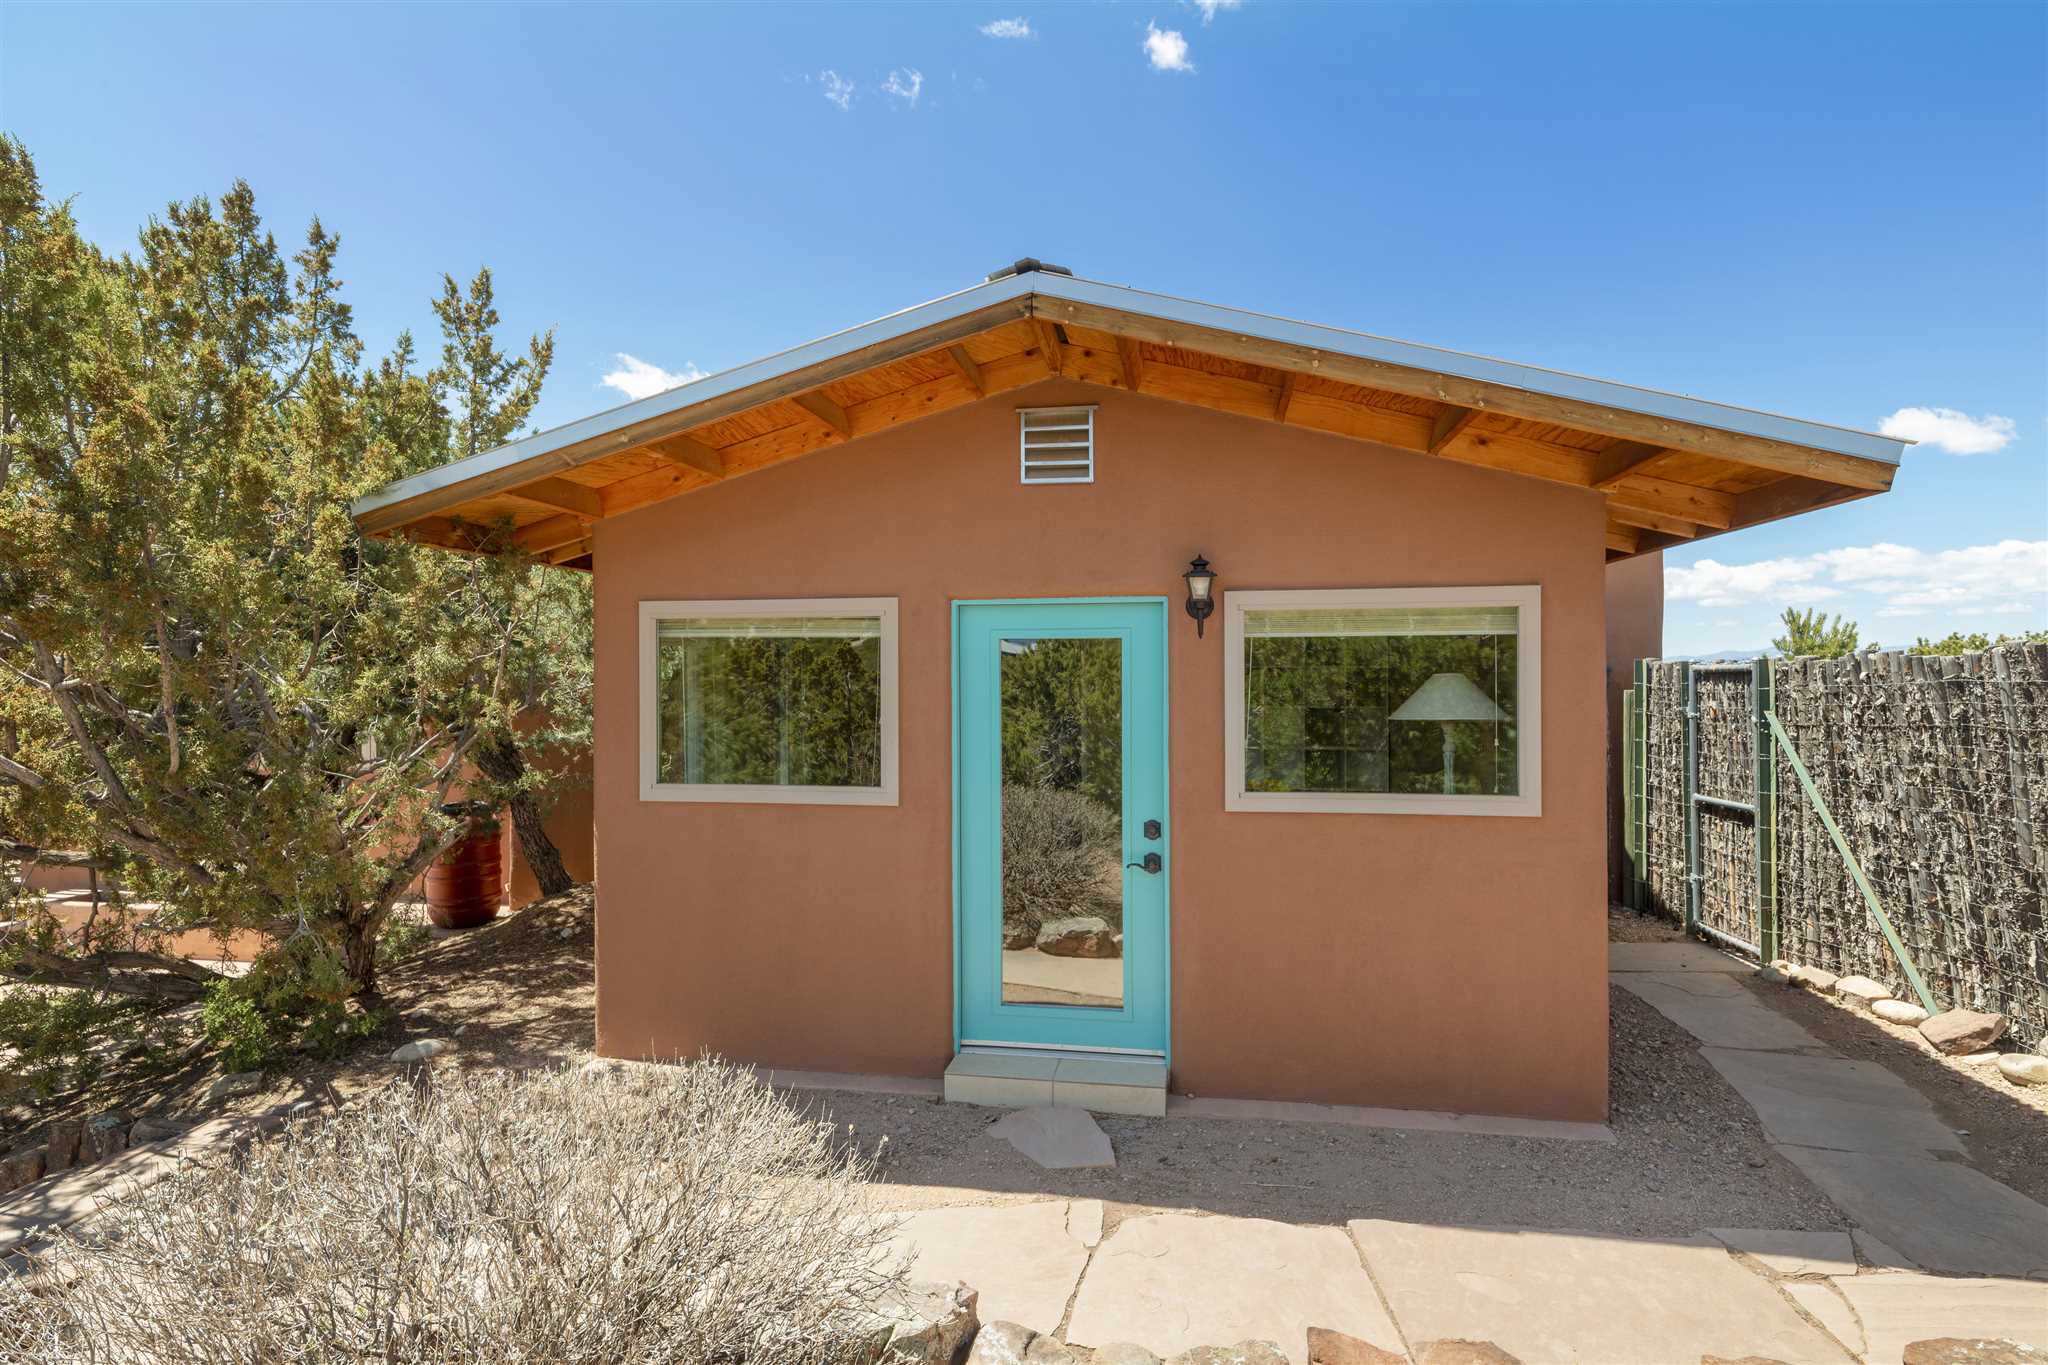 63 Tano, Santa Fe, New Mexico 87506, 3 Bedrooms Bedrooms, ,2 BathroomsBathrooms,Residential,For Sale,63 Tano,202101583